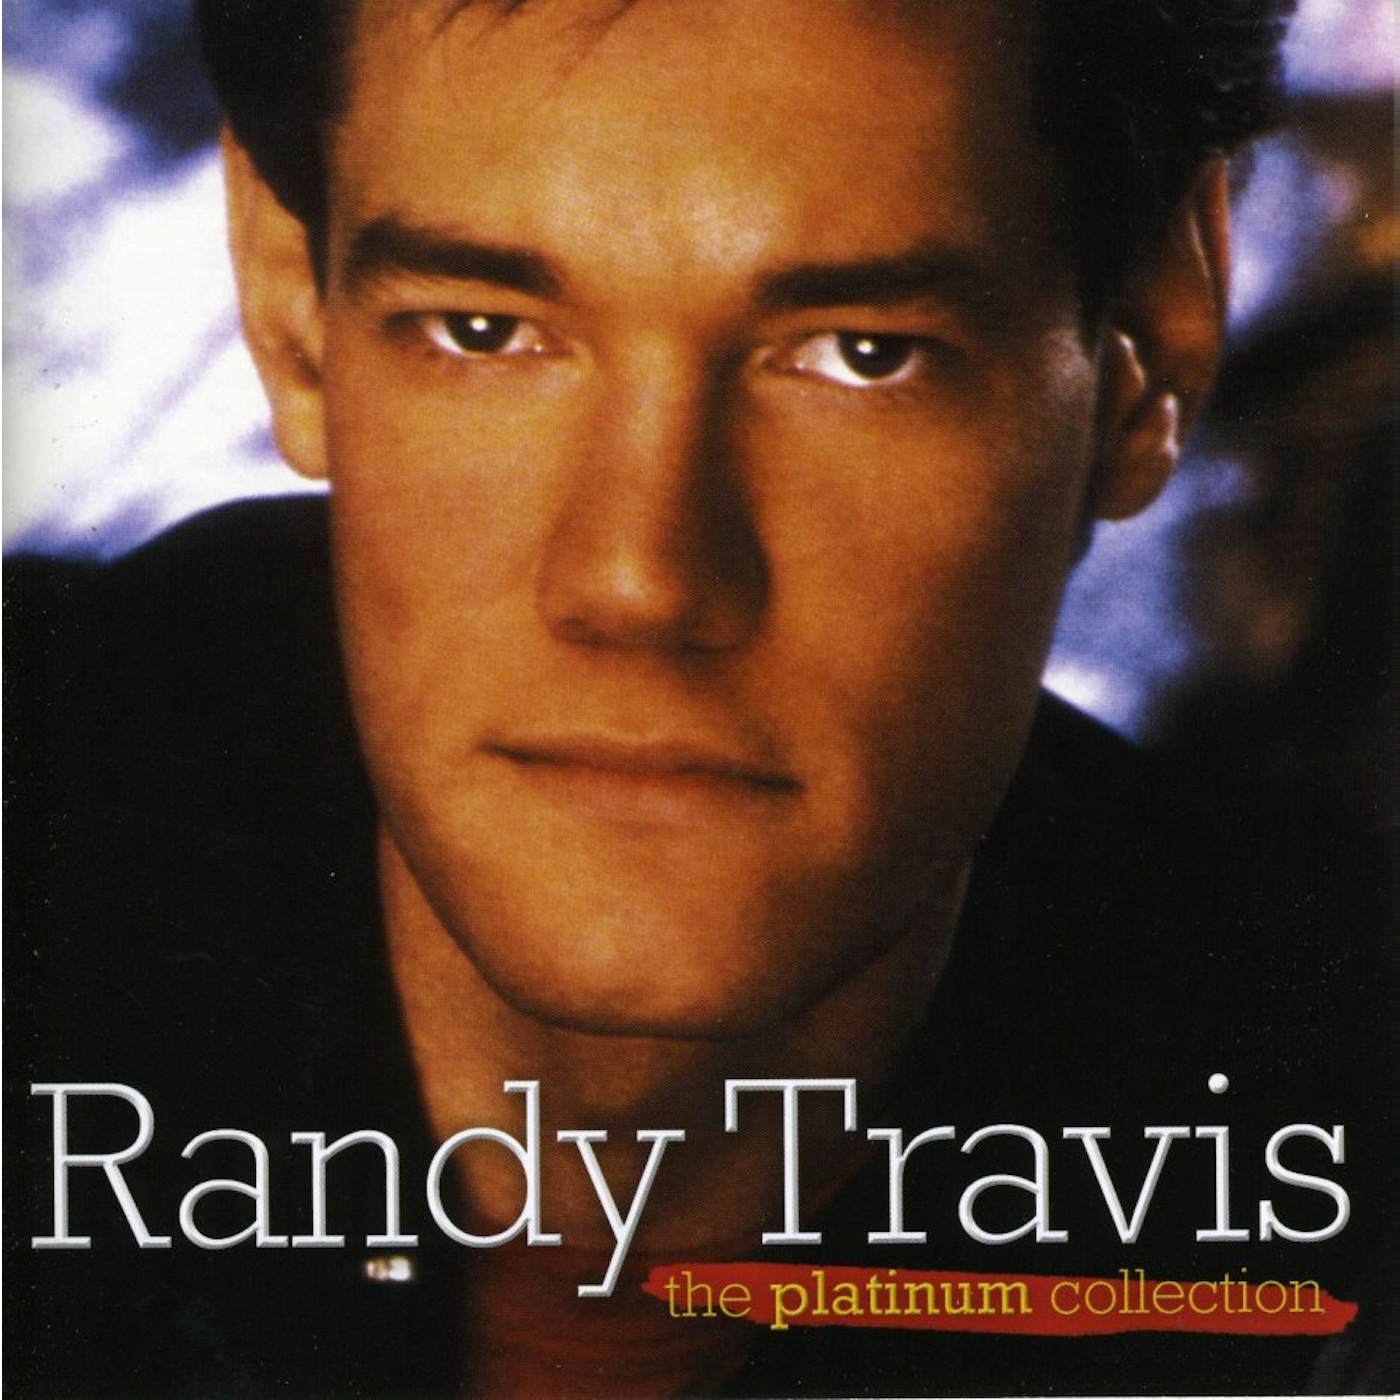 Randy Travis PLATINUM COLLECTION CD